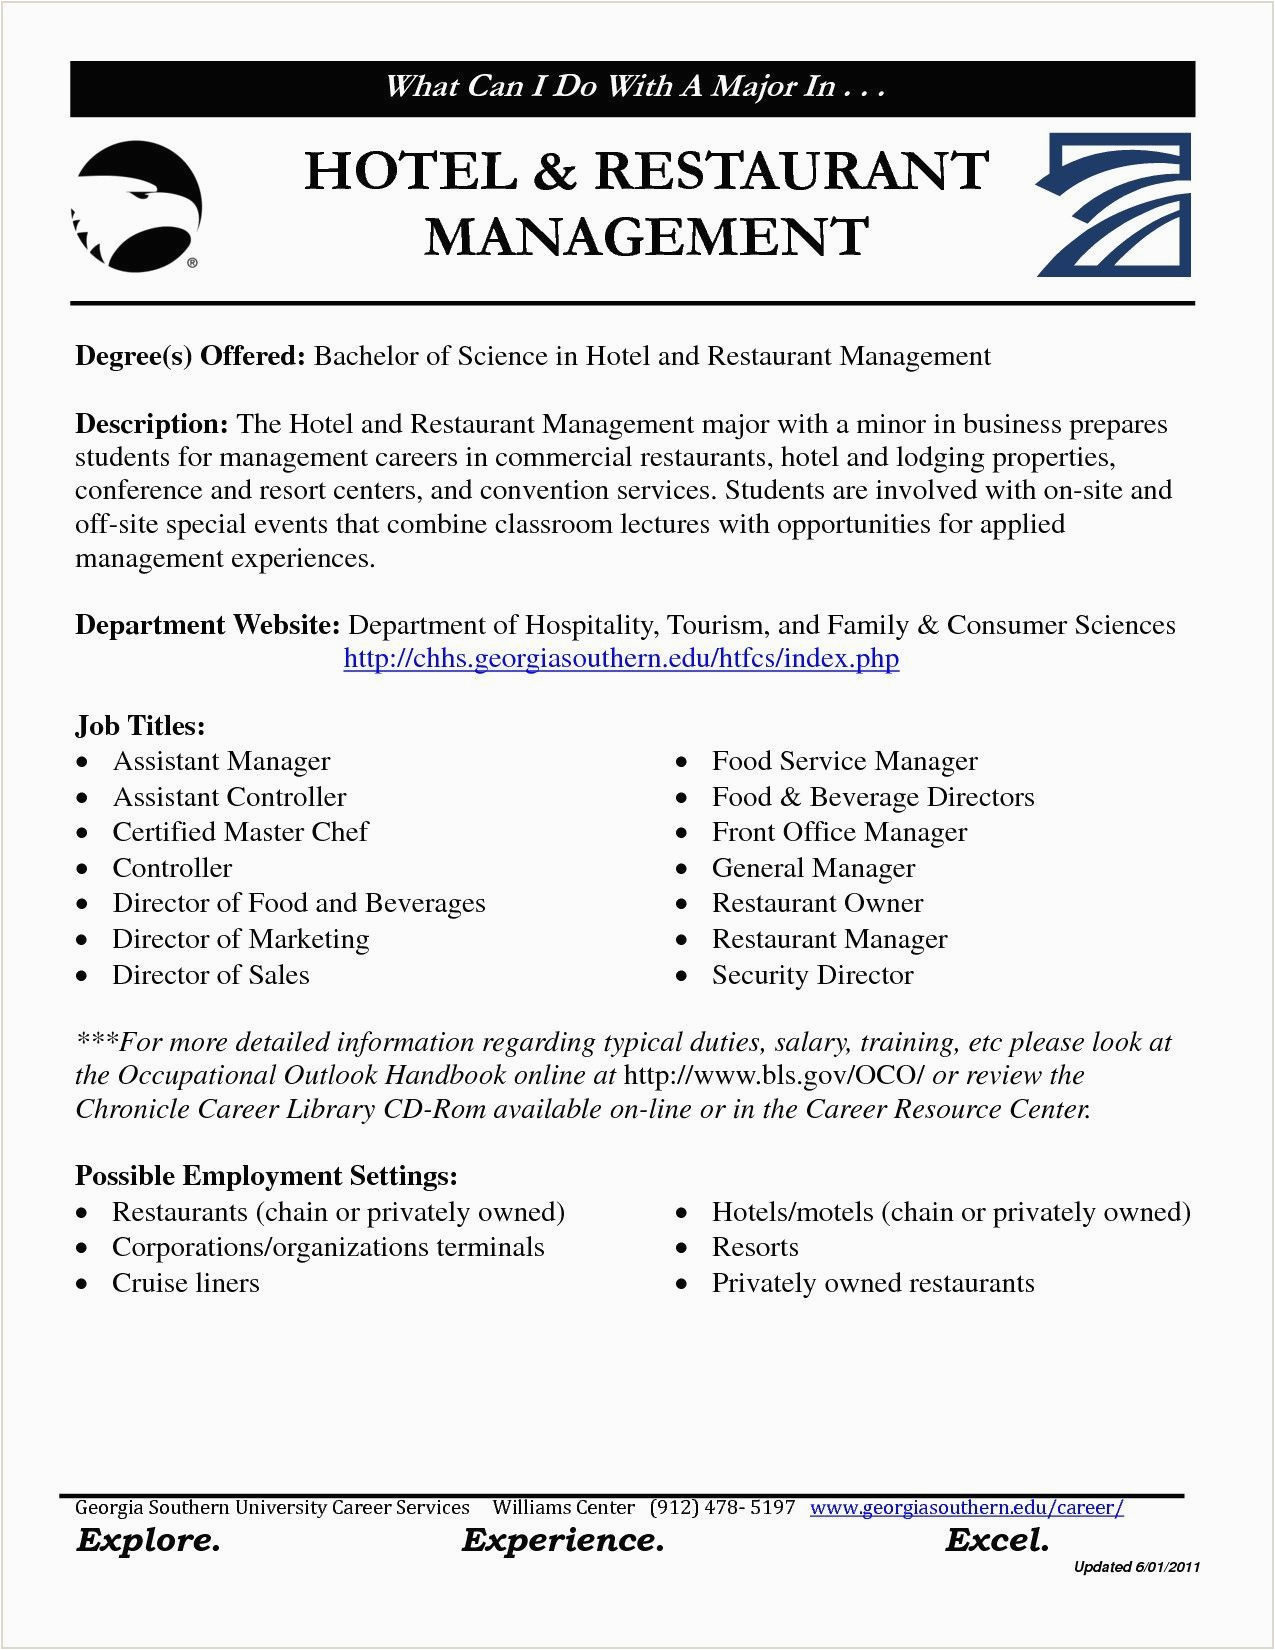 Sample Resume for Hotel and Restaurant Management Fresh Graduate Resume format In Word for Hotel Management Fresher